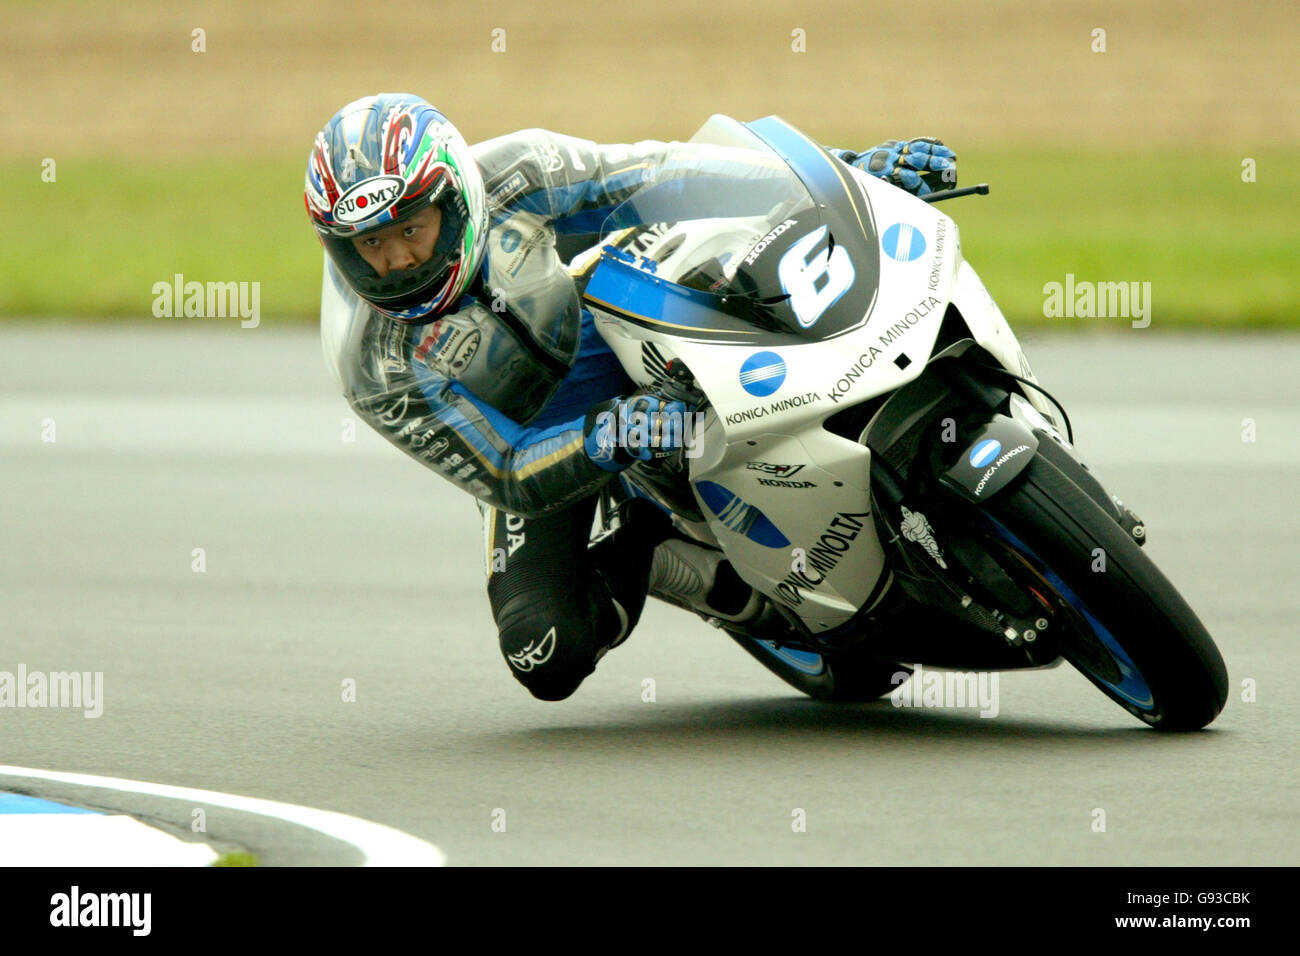 Motociclismo - Gran Premio di Gran Bretagna - Moto GP - gara - Donnington Park. Makota Tamada, Konica Minolta Honda Foto Stock